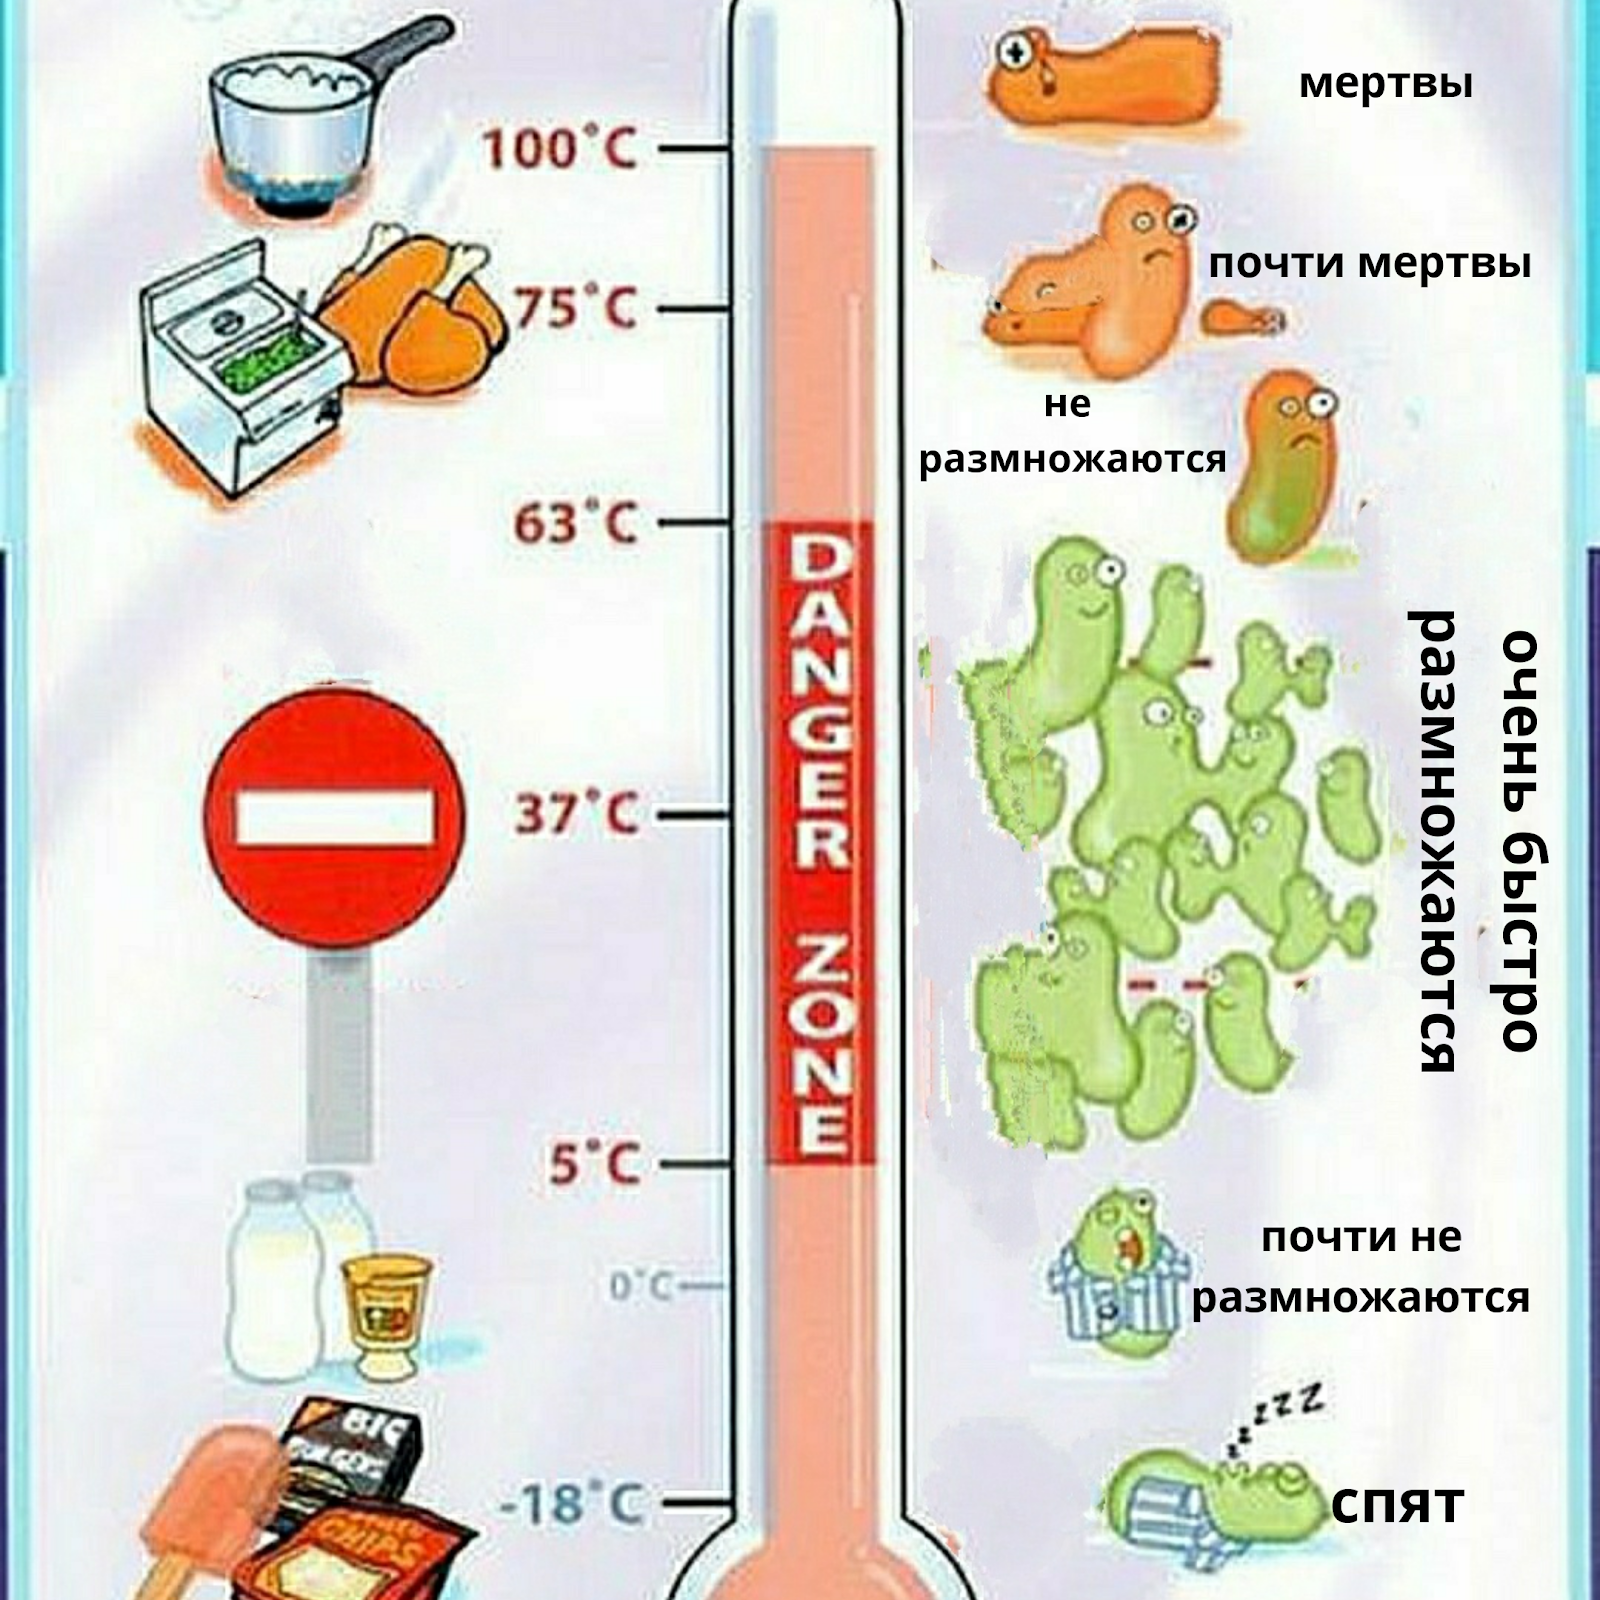 Опасная температура воды. Влияние температуры на микроорганизмы. Влияние температуры на бактерии. Влияние низких температур на микроорганизмы. Влияние температуры на размножение бактерий.